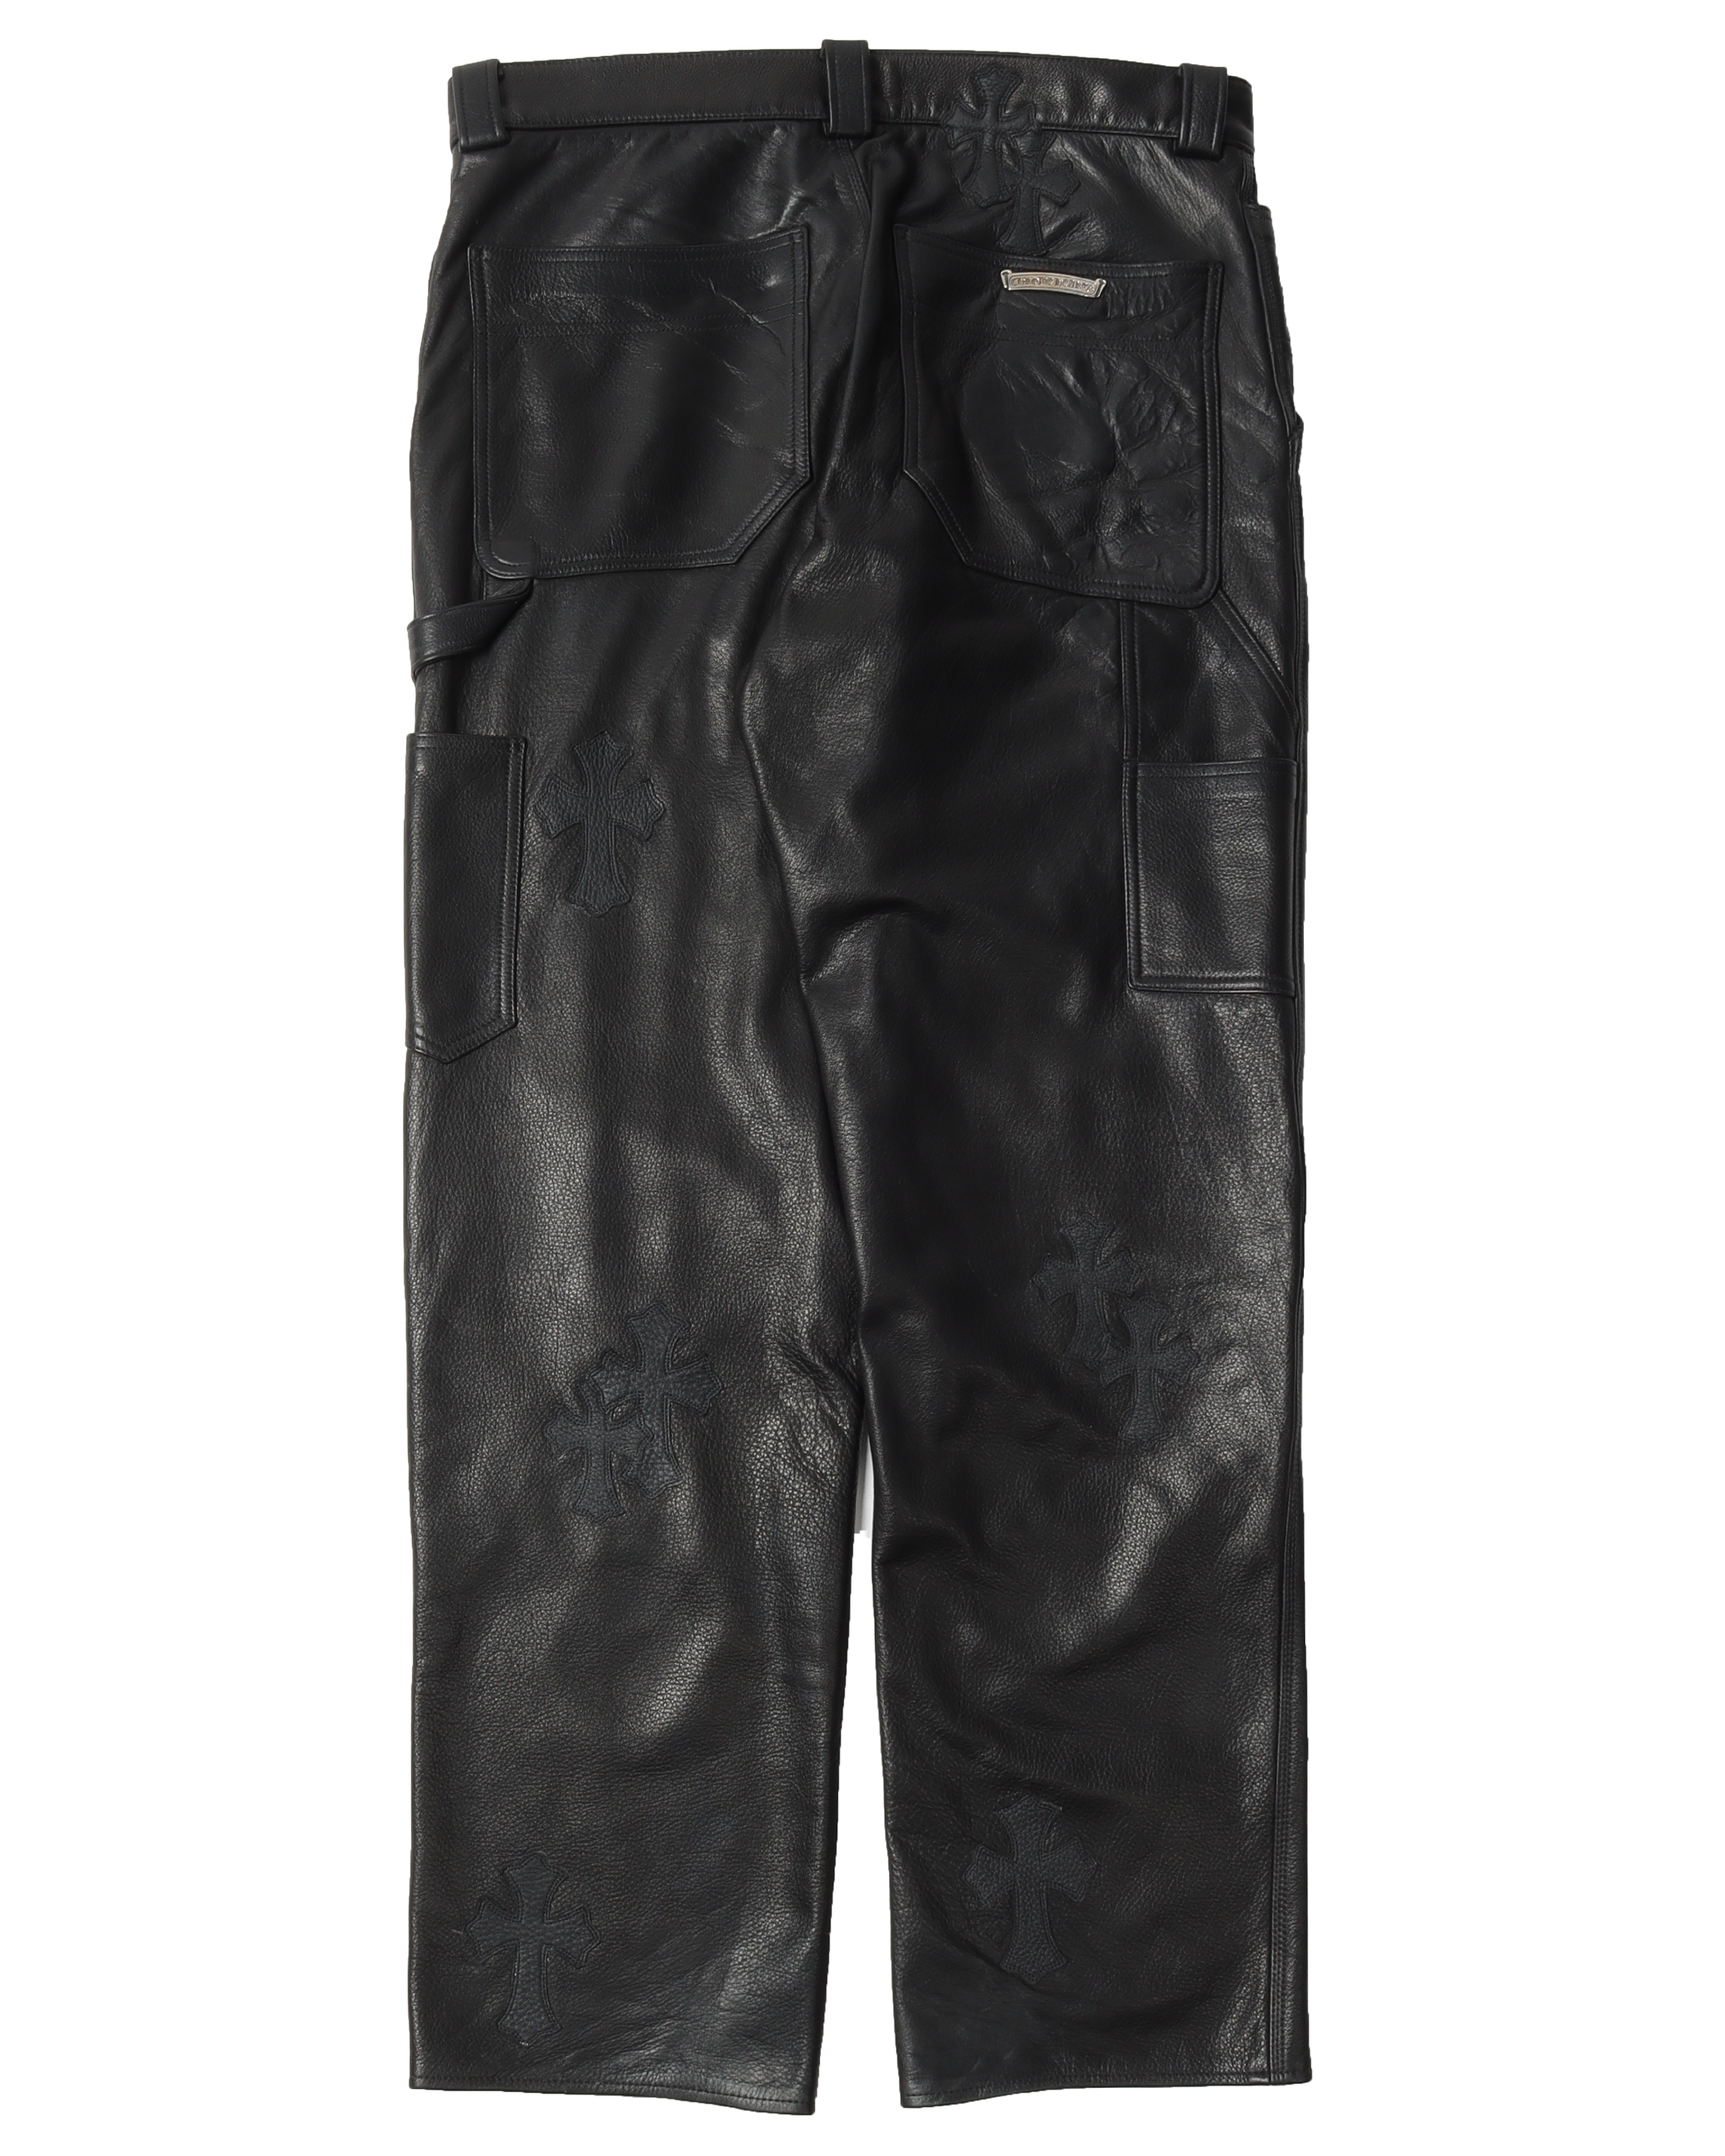 Leather Carpenter Cross Pants